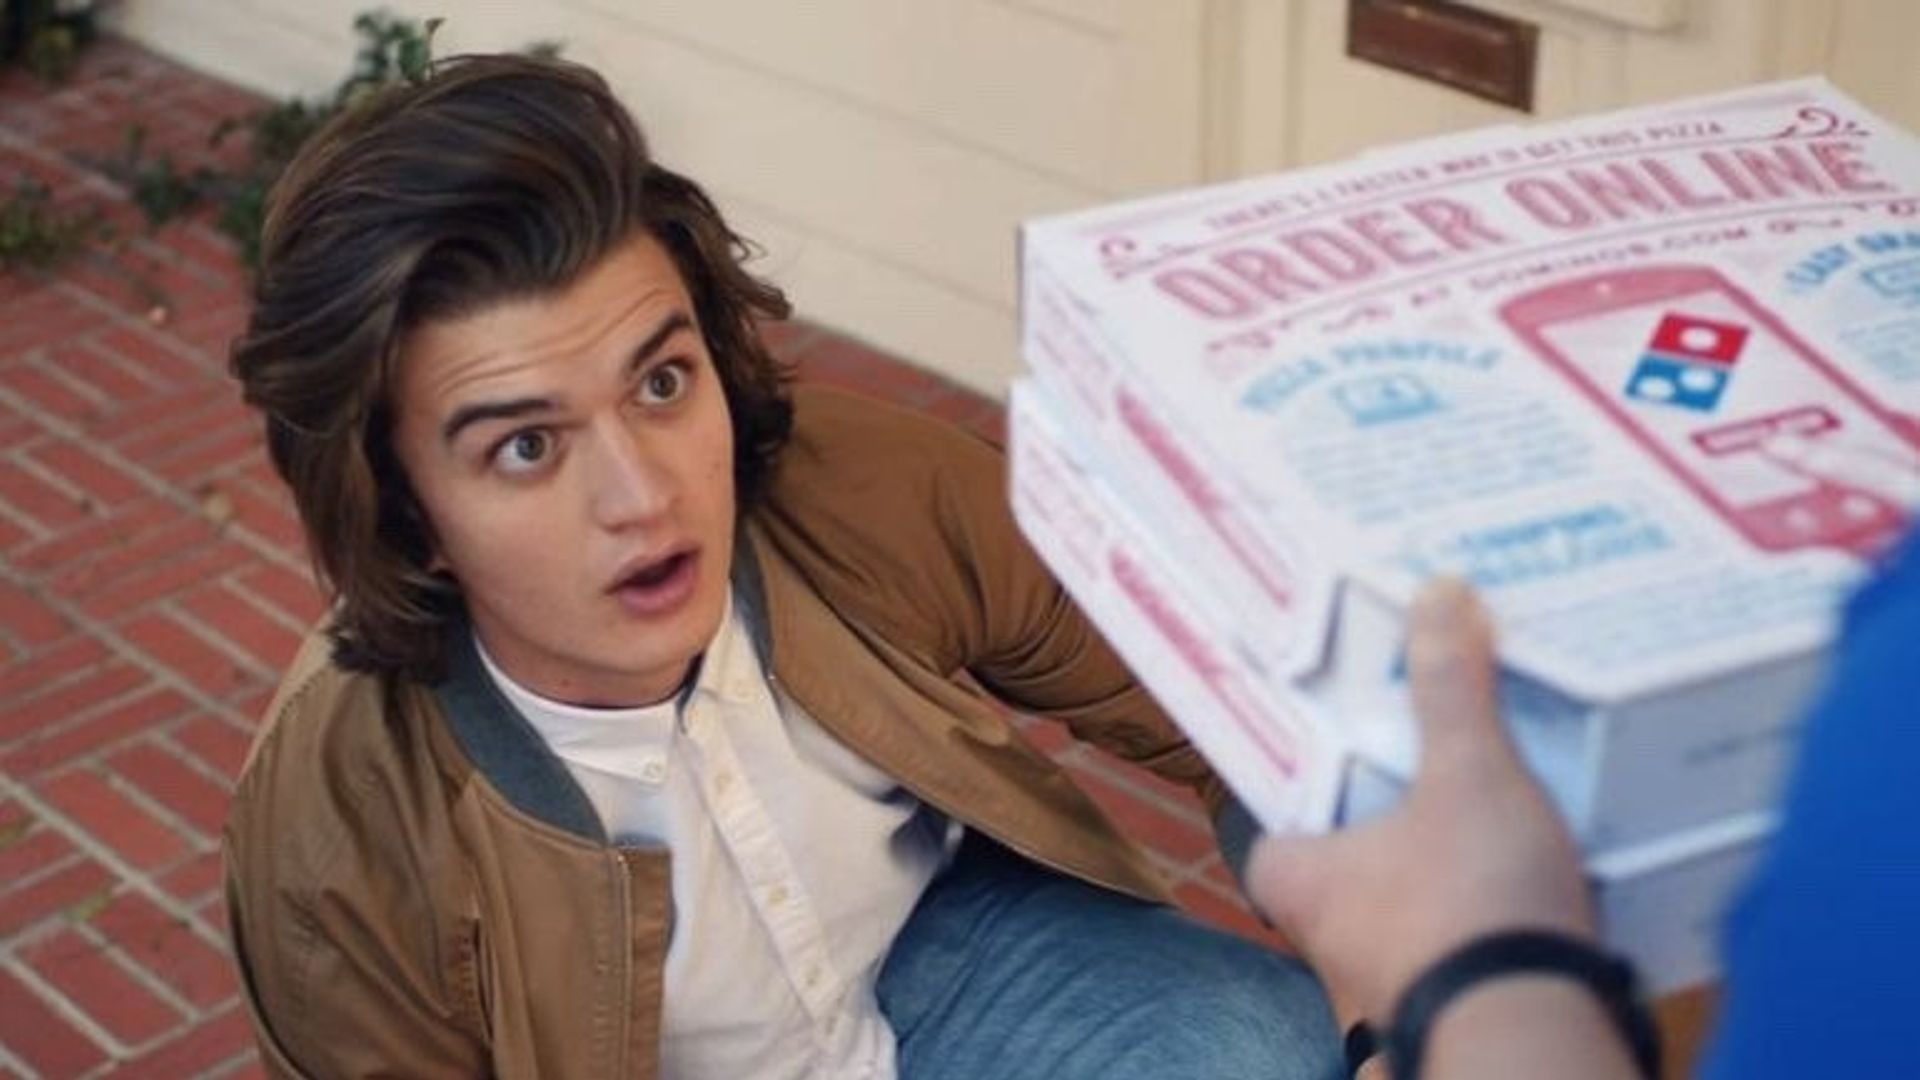 Joe Keery in Domino’s Pizza commercial